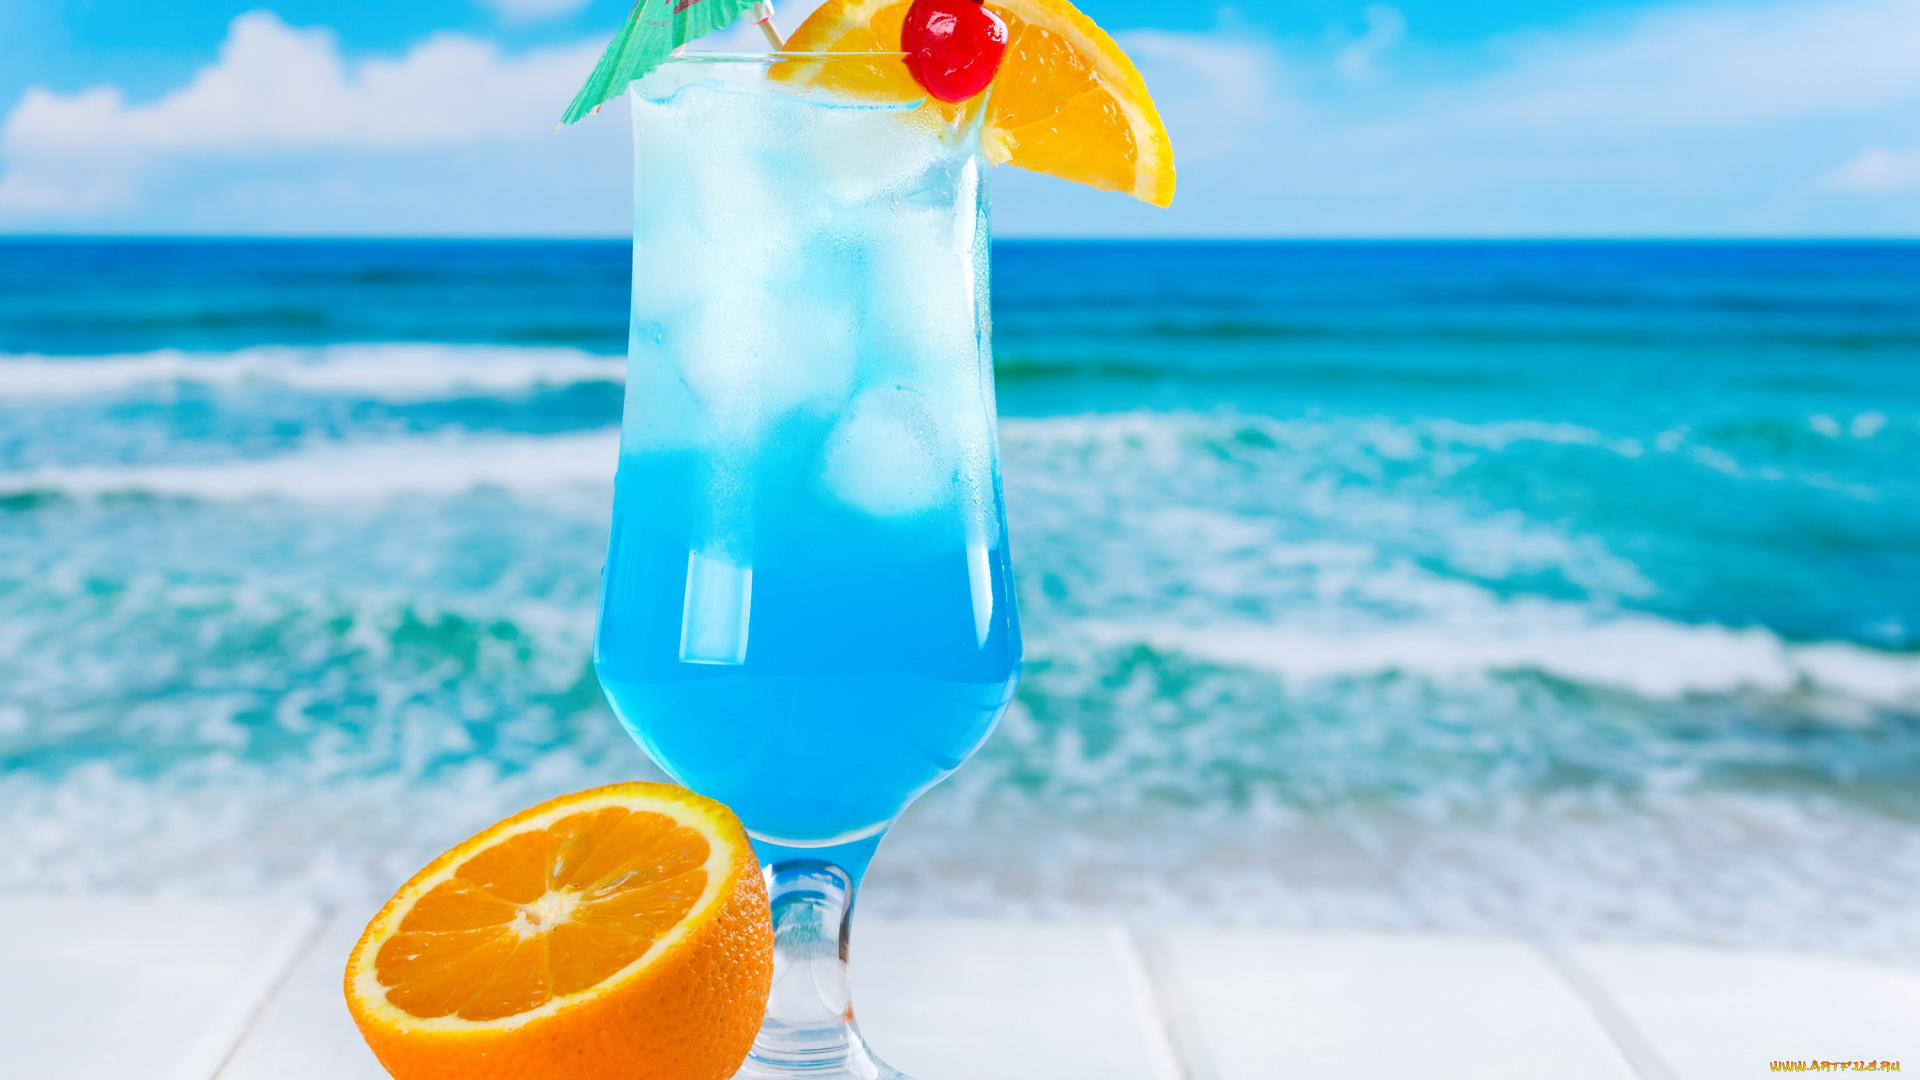 еда, напитки, , коктейль, вишня, апельсин, фрукты, море, tropical, curacao, orange, drink, fruits, blue, cocktail, коктейль, fresh, пляж, лед